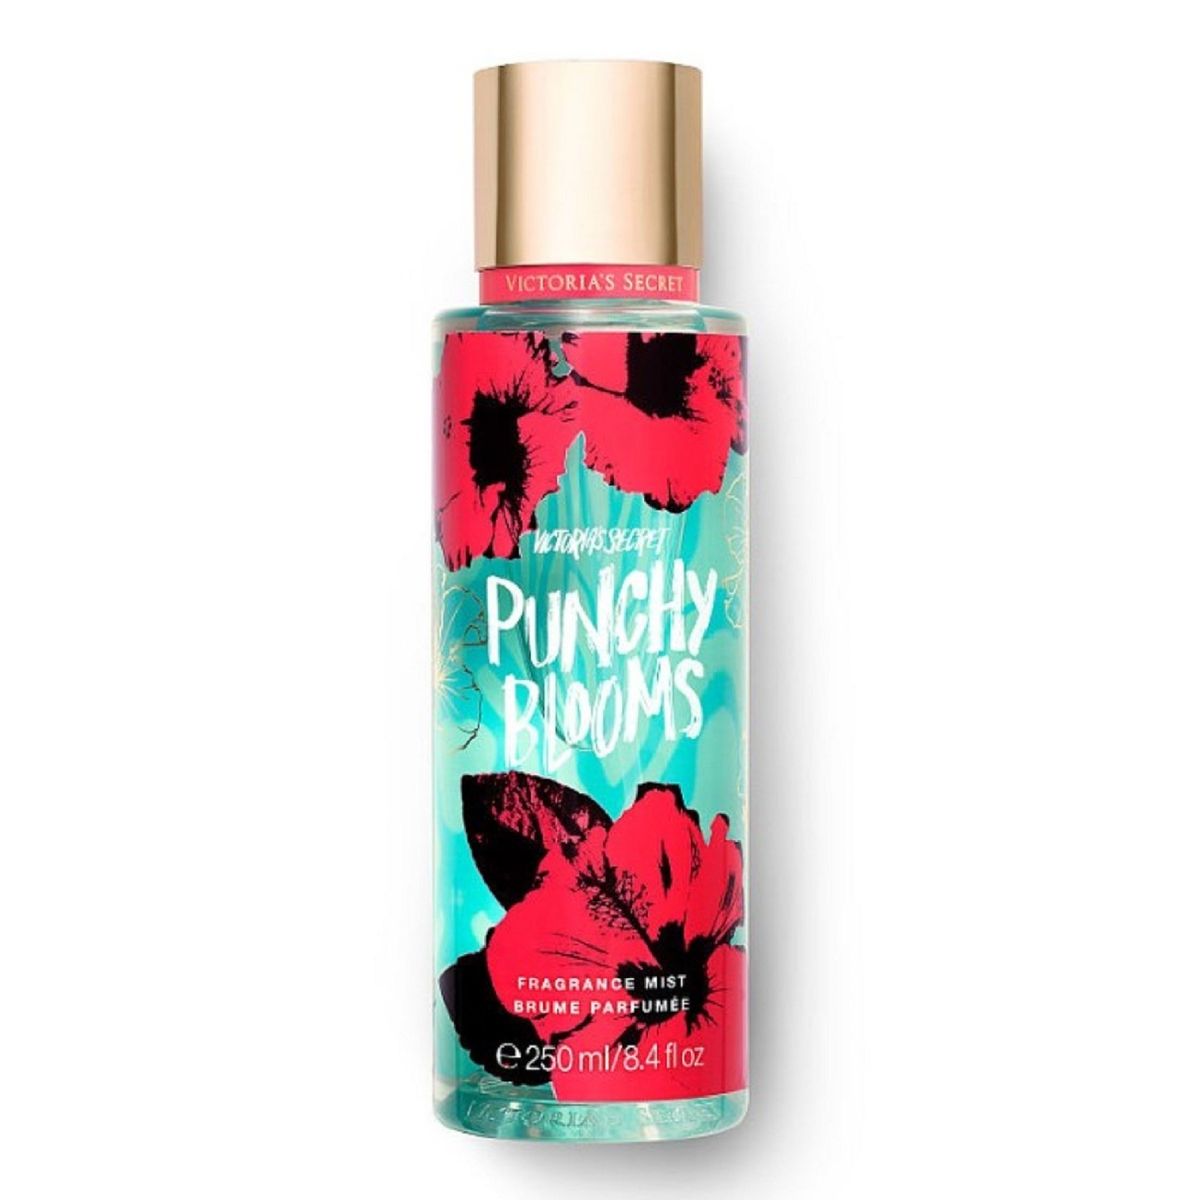 Victoria's Secret GLITTER HUSTLE Fragrance Mist & Body Lotion 2 PC SET  NEW!!!!! 667548022286